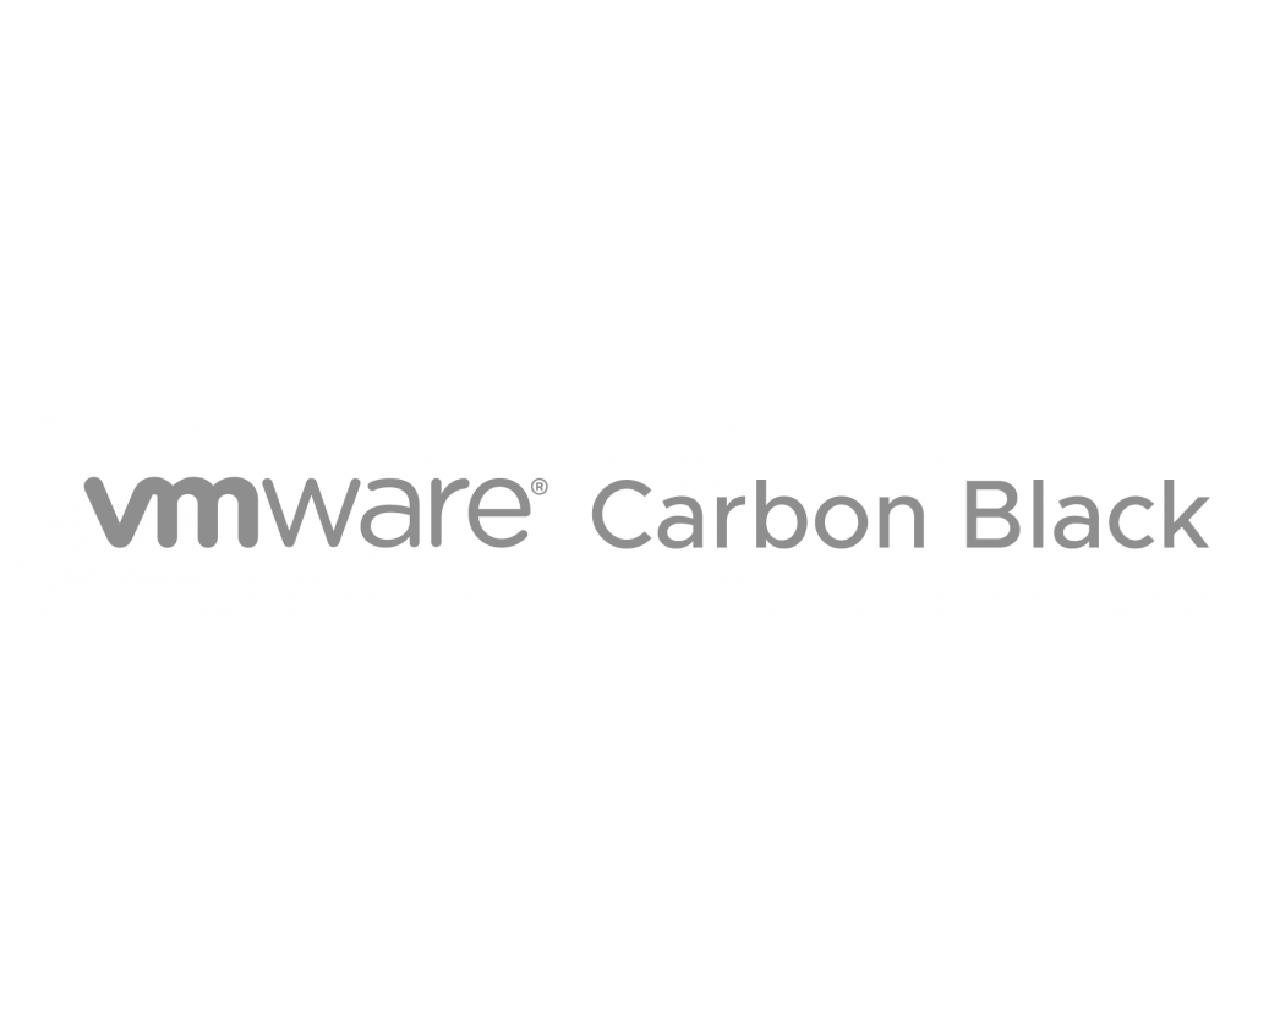 vmware carbon black logo